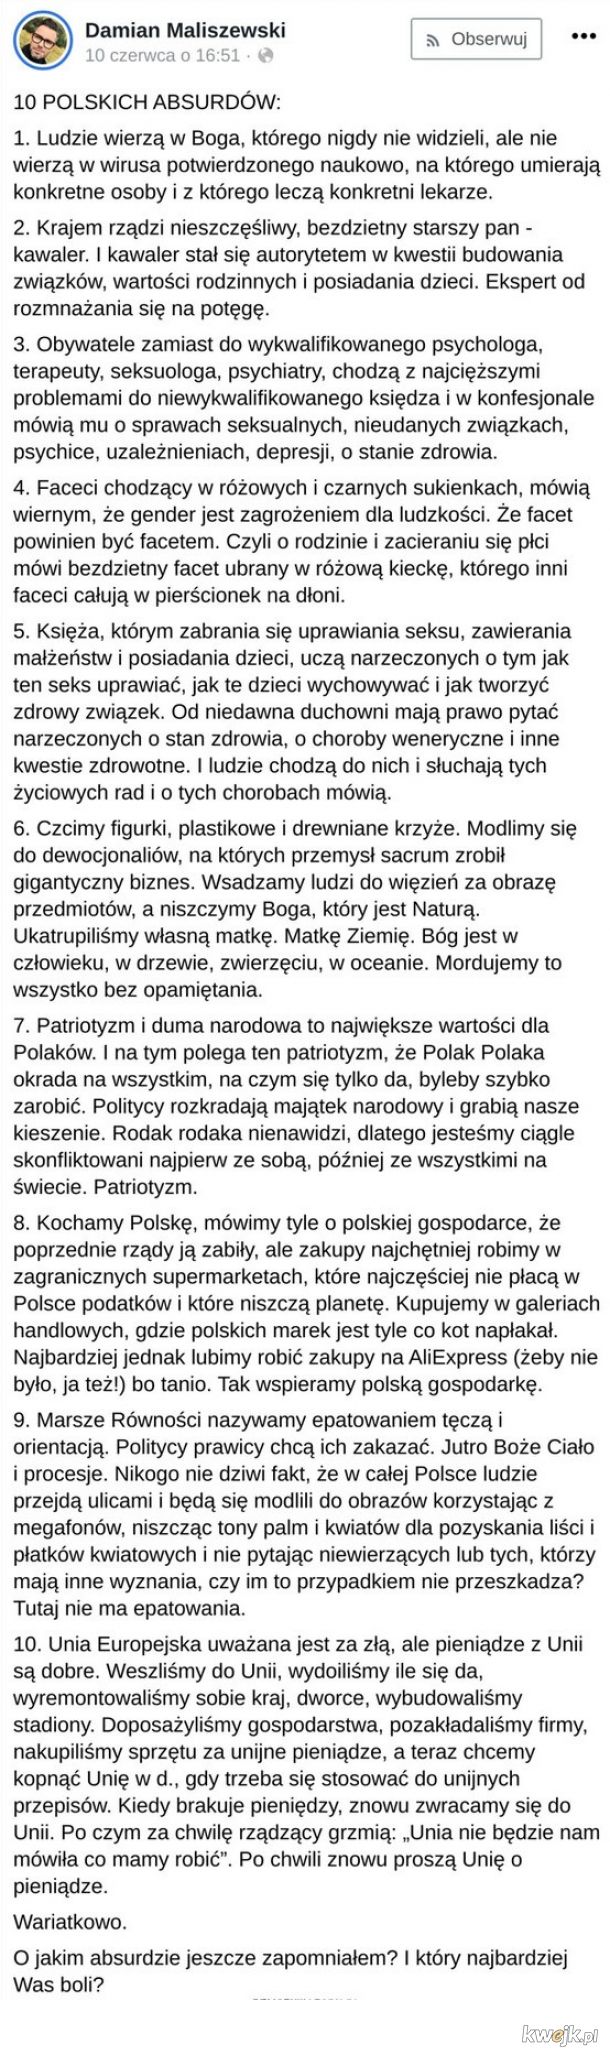 10 Polskich absurdow...